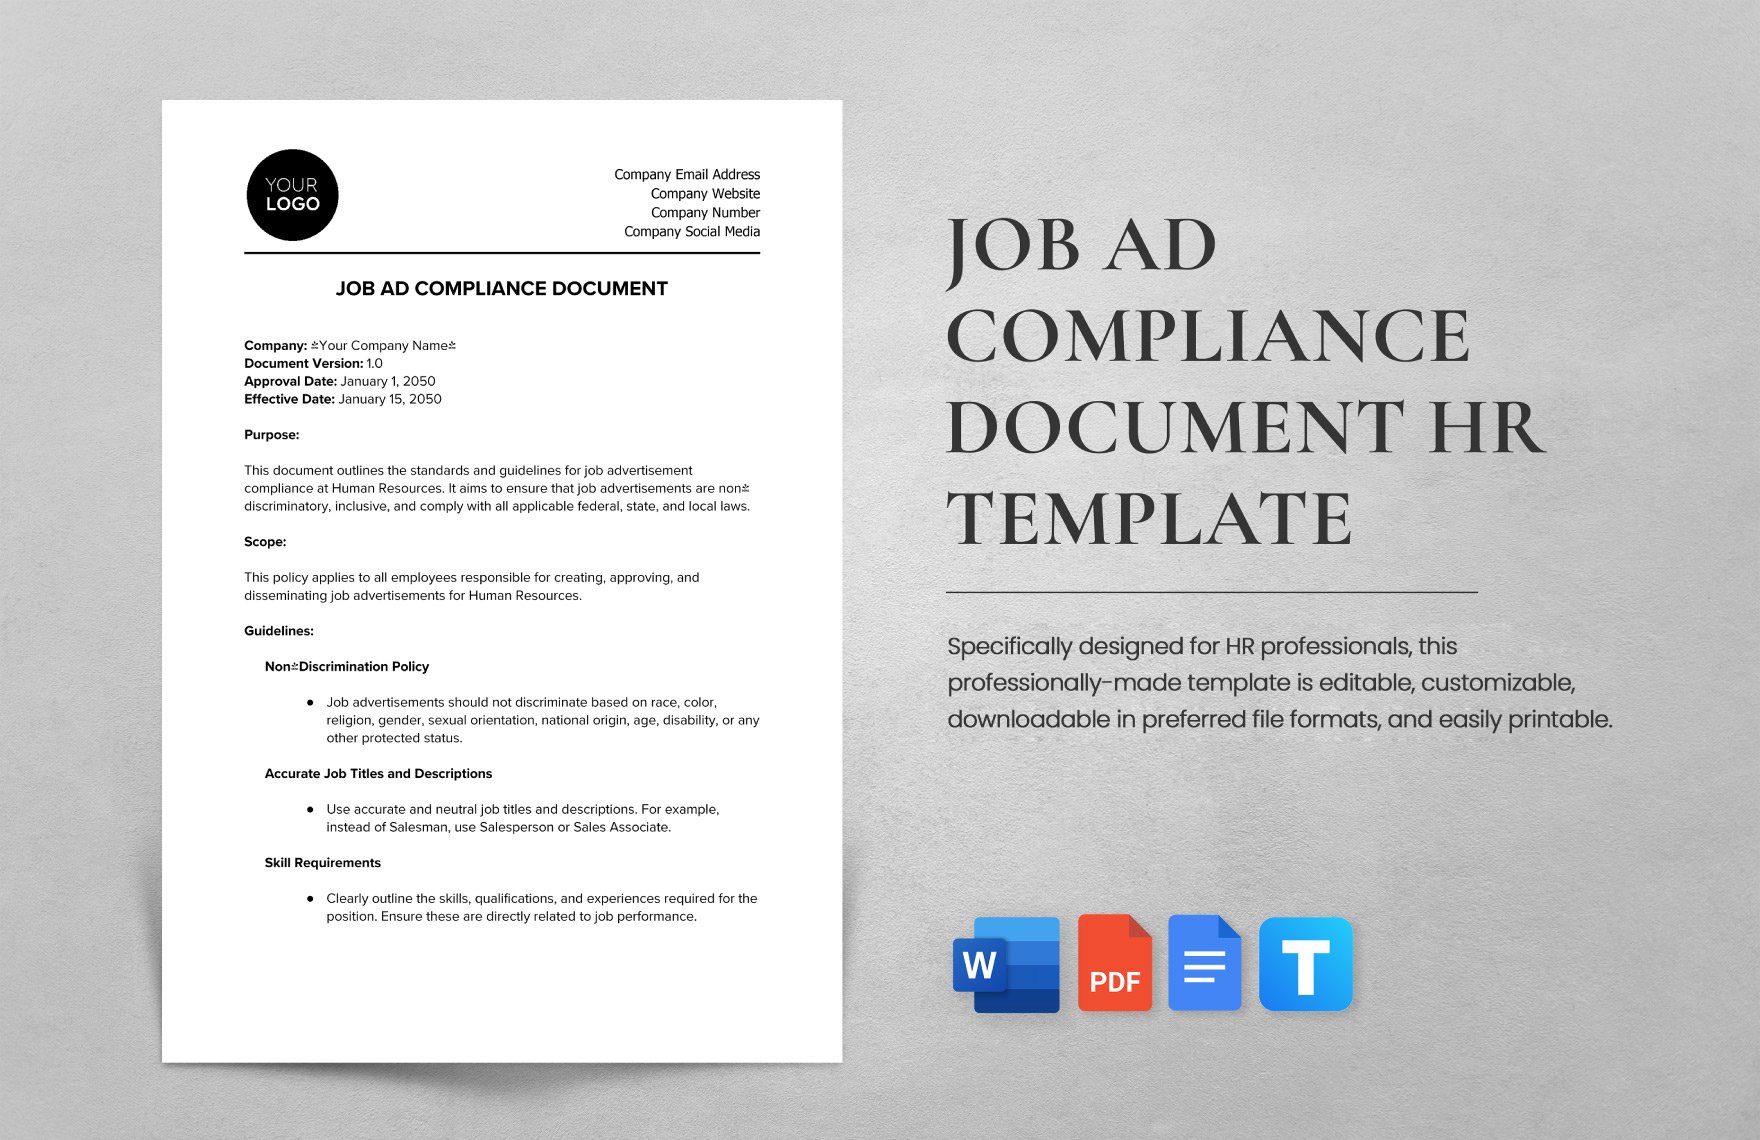 Job Ad Compliance Document HR Template